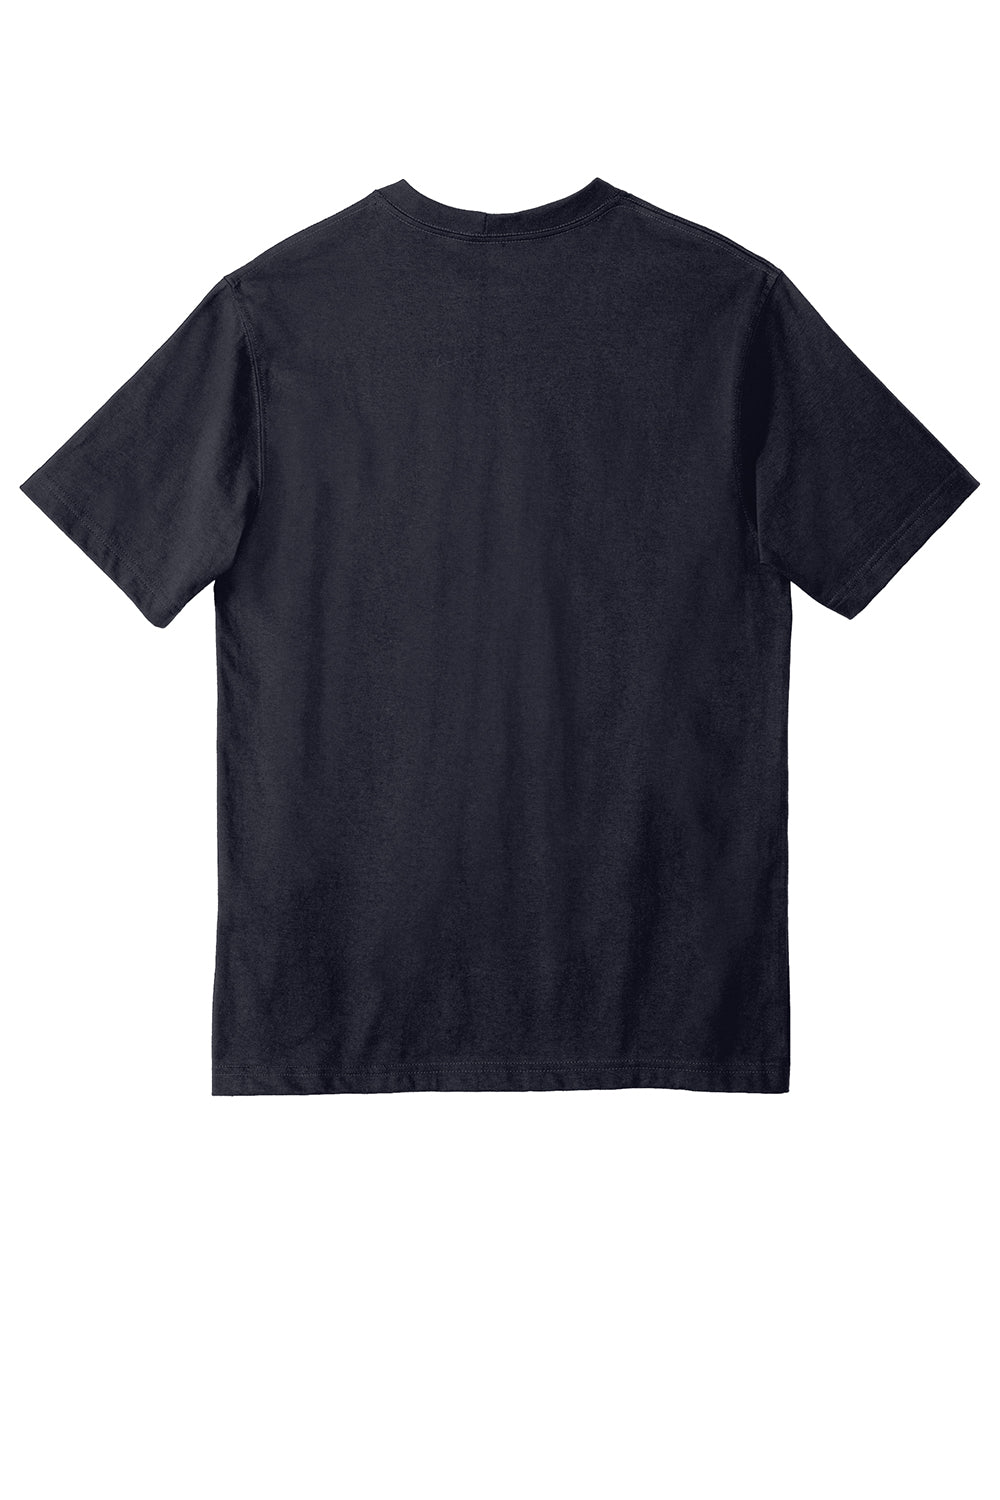 Carhartt CTK87/CTTK87 Mens Workwear Short Sleeve Crewneck T-Shirt w/ Pocket Navy Blue Flat Back